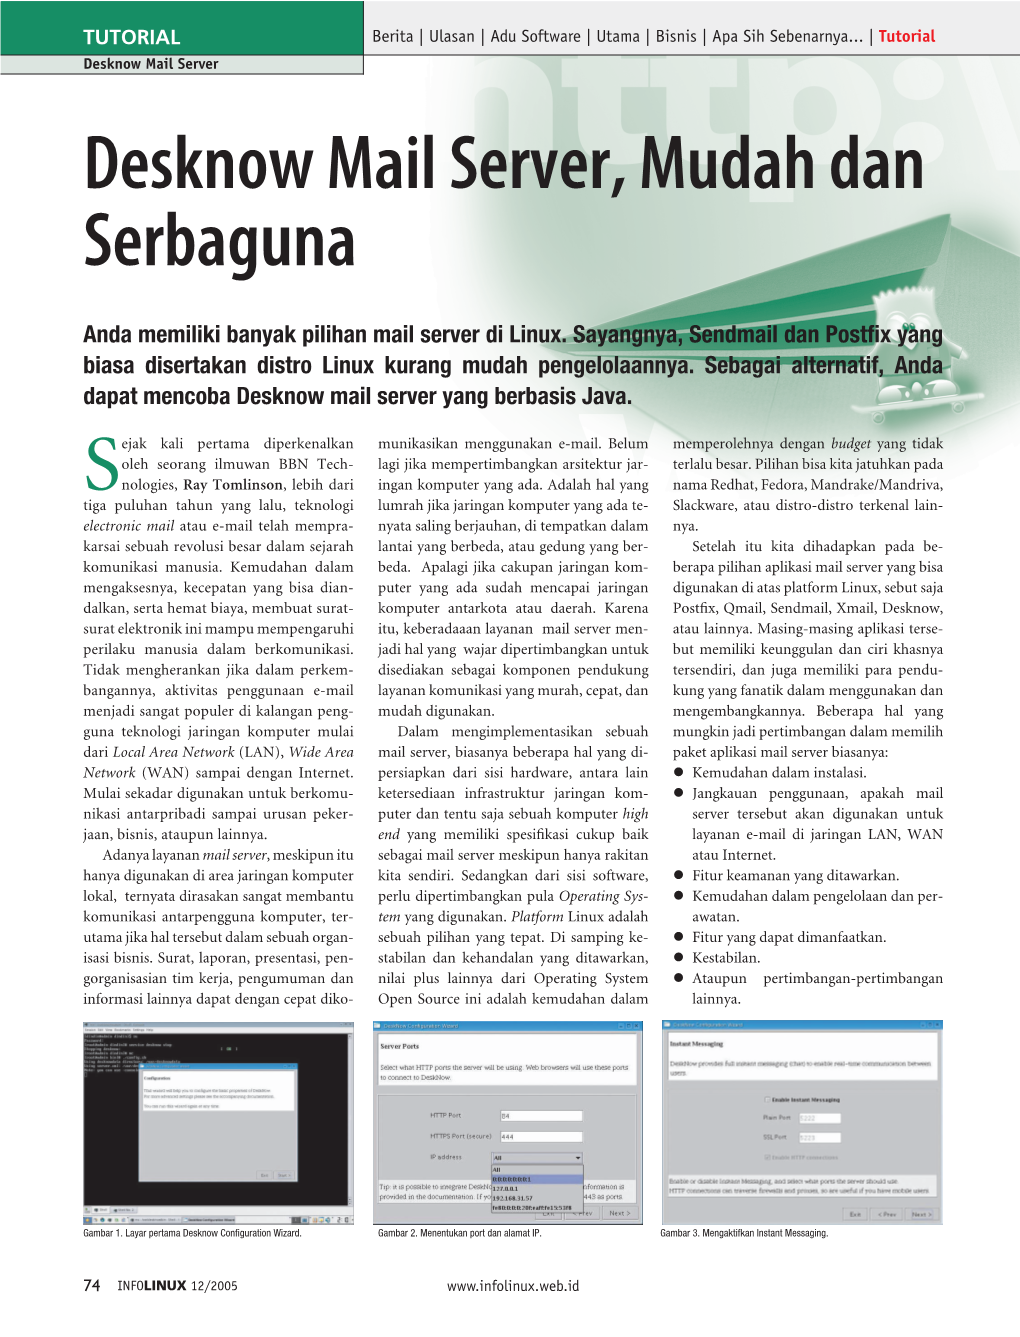 Desknow Mail Server, Mudah Dan Serbaguna